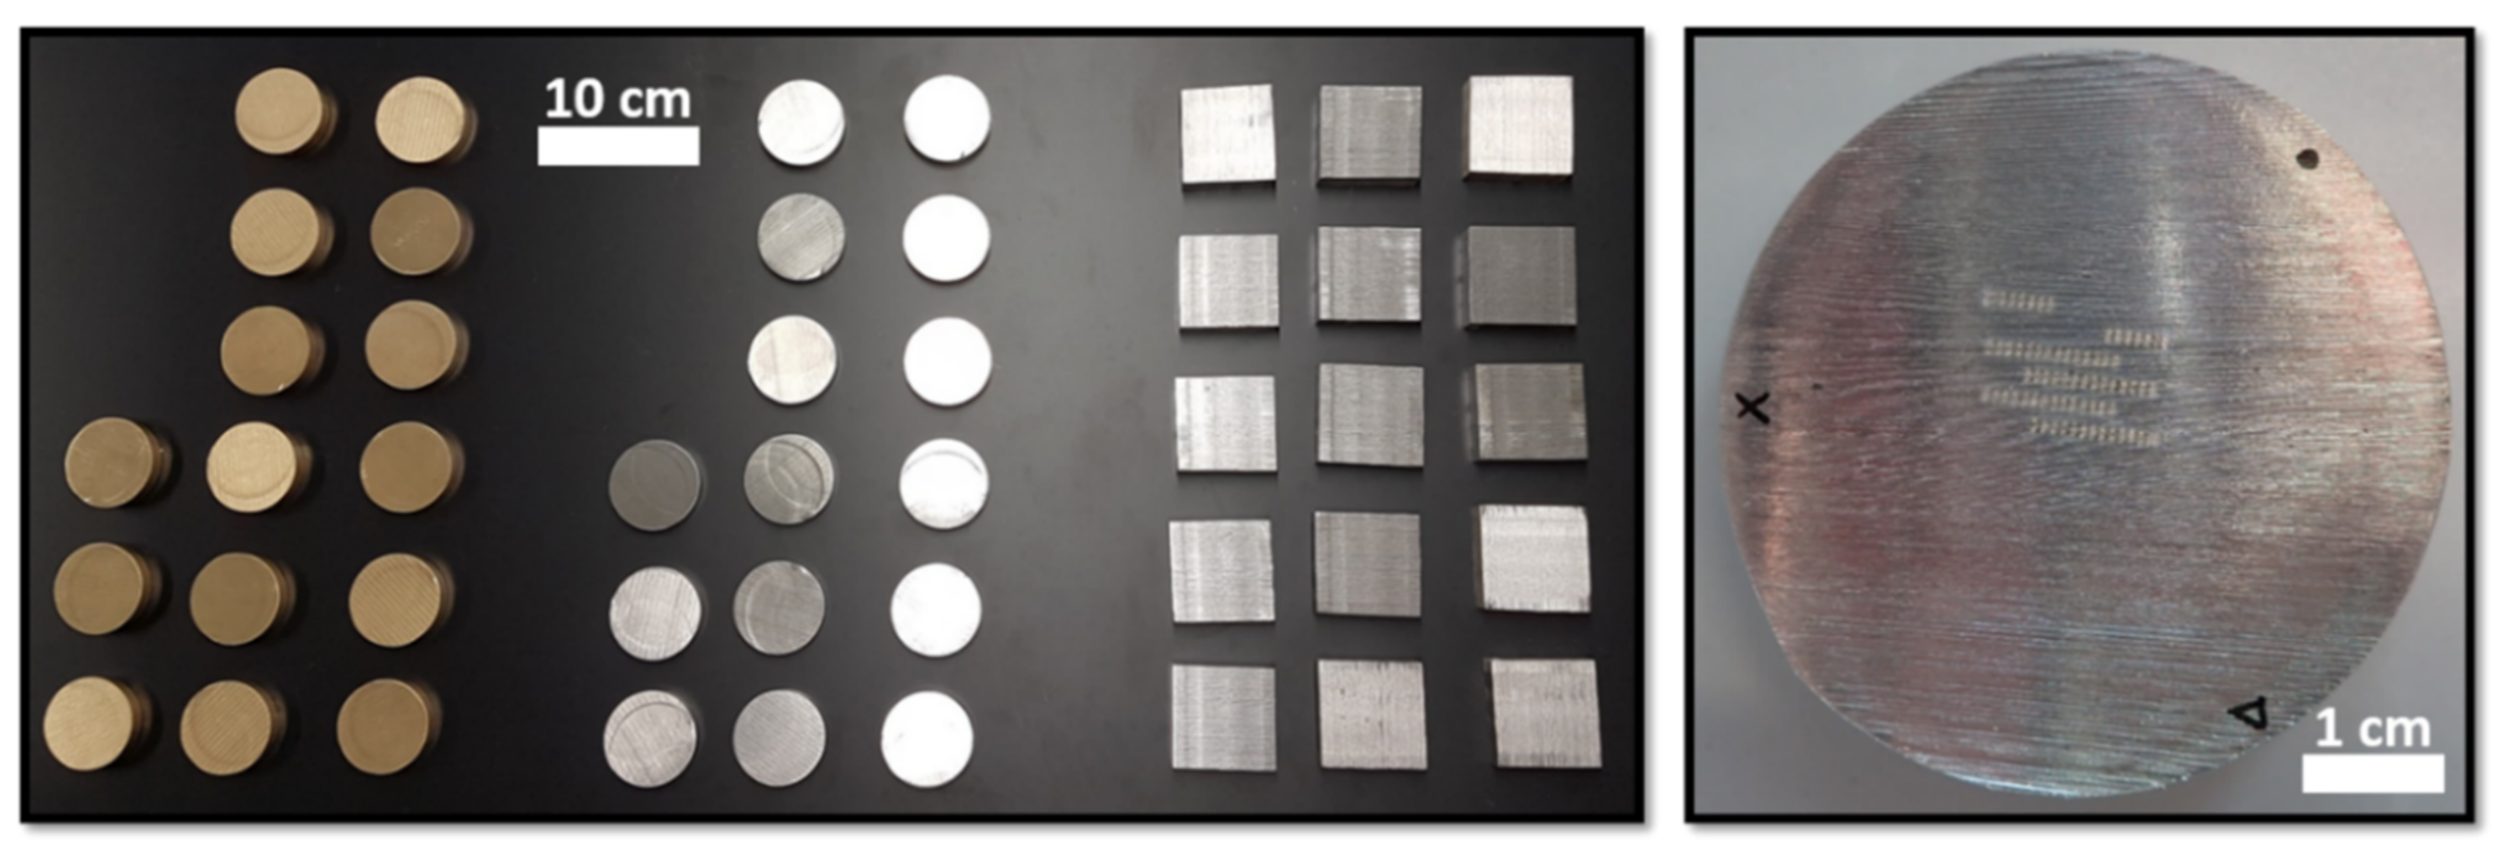 Benchmark Stainless Steel Pins (100-Pack), Installation Supplies, Exhibit  & Display